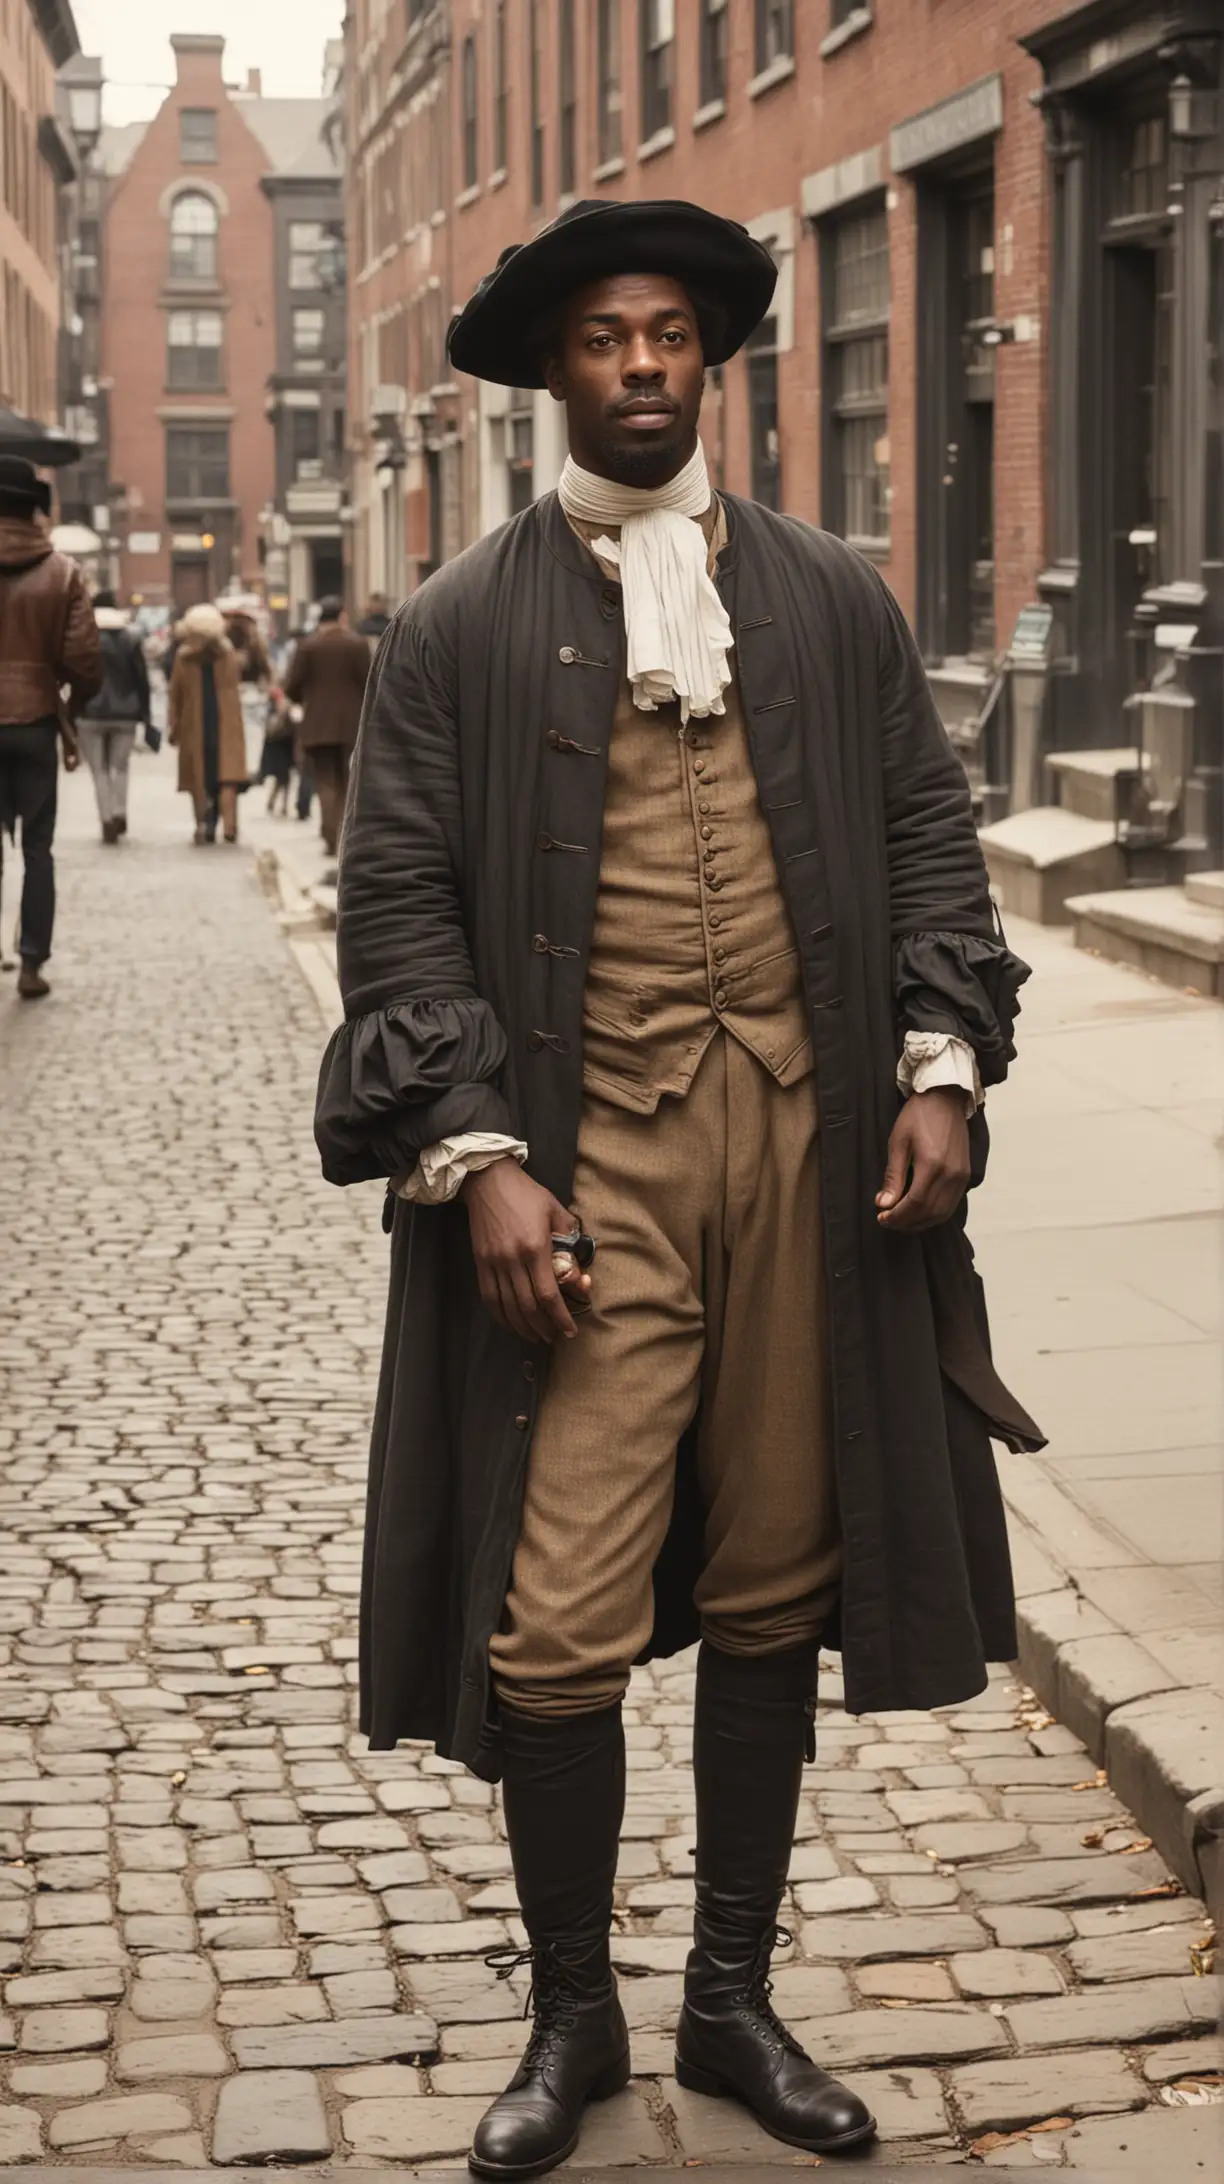 Seventeenth Century Black Man in Boston streets

